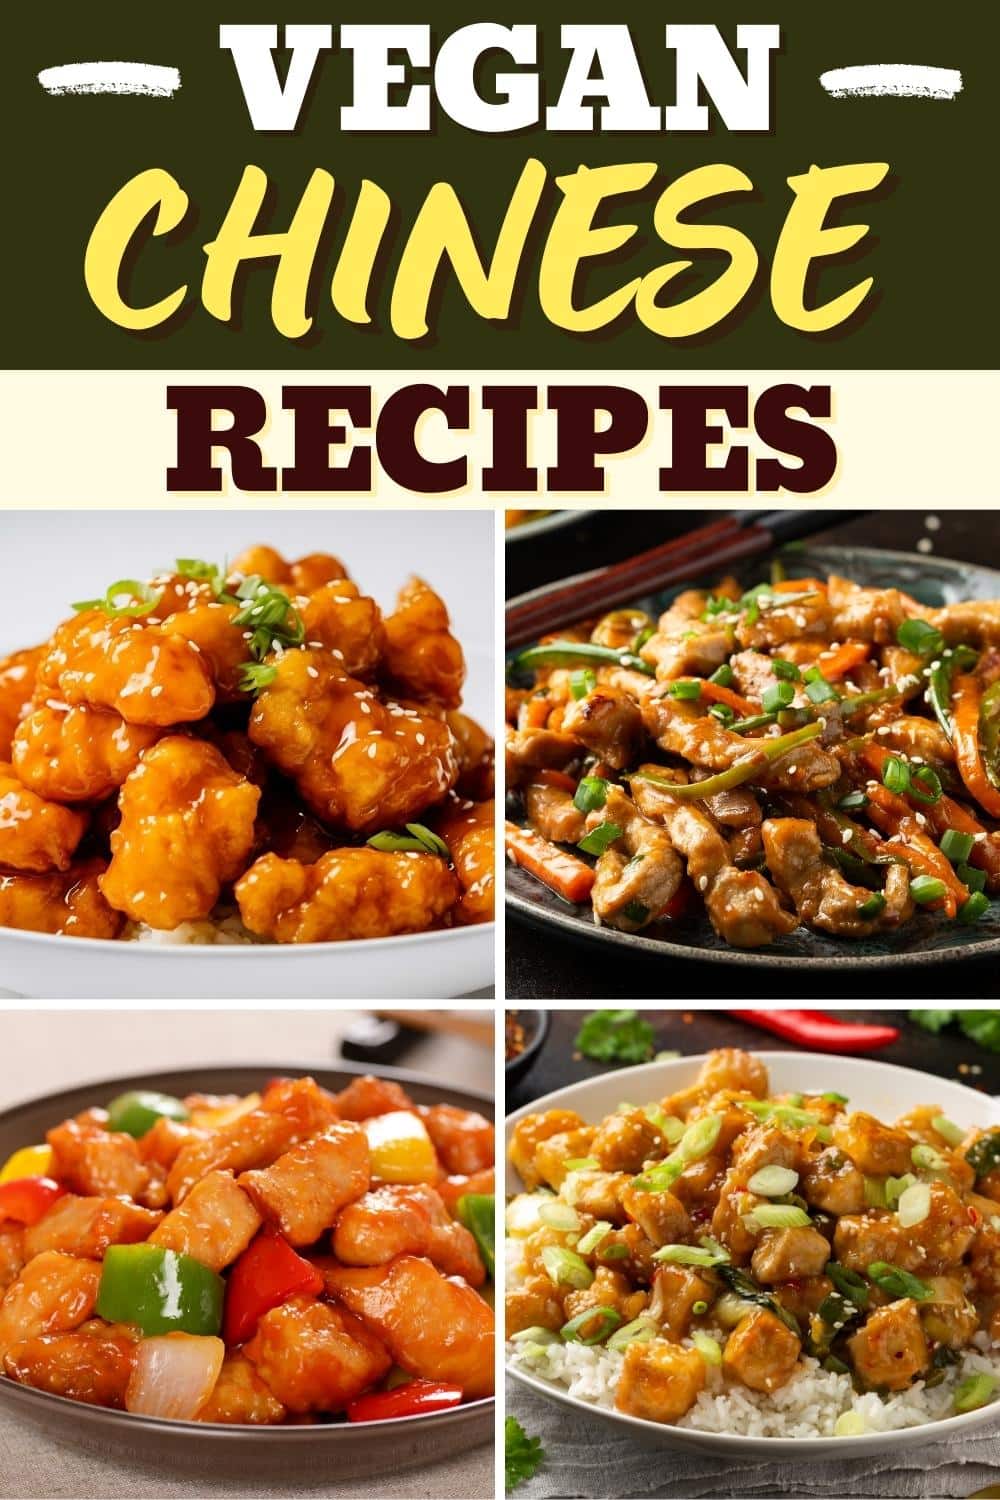 Vegan Chinese Recipes